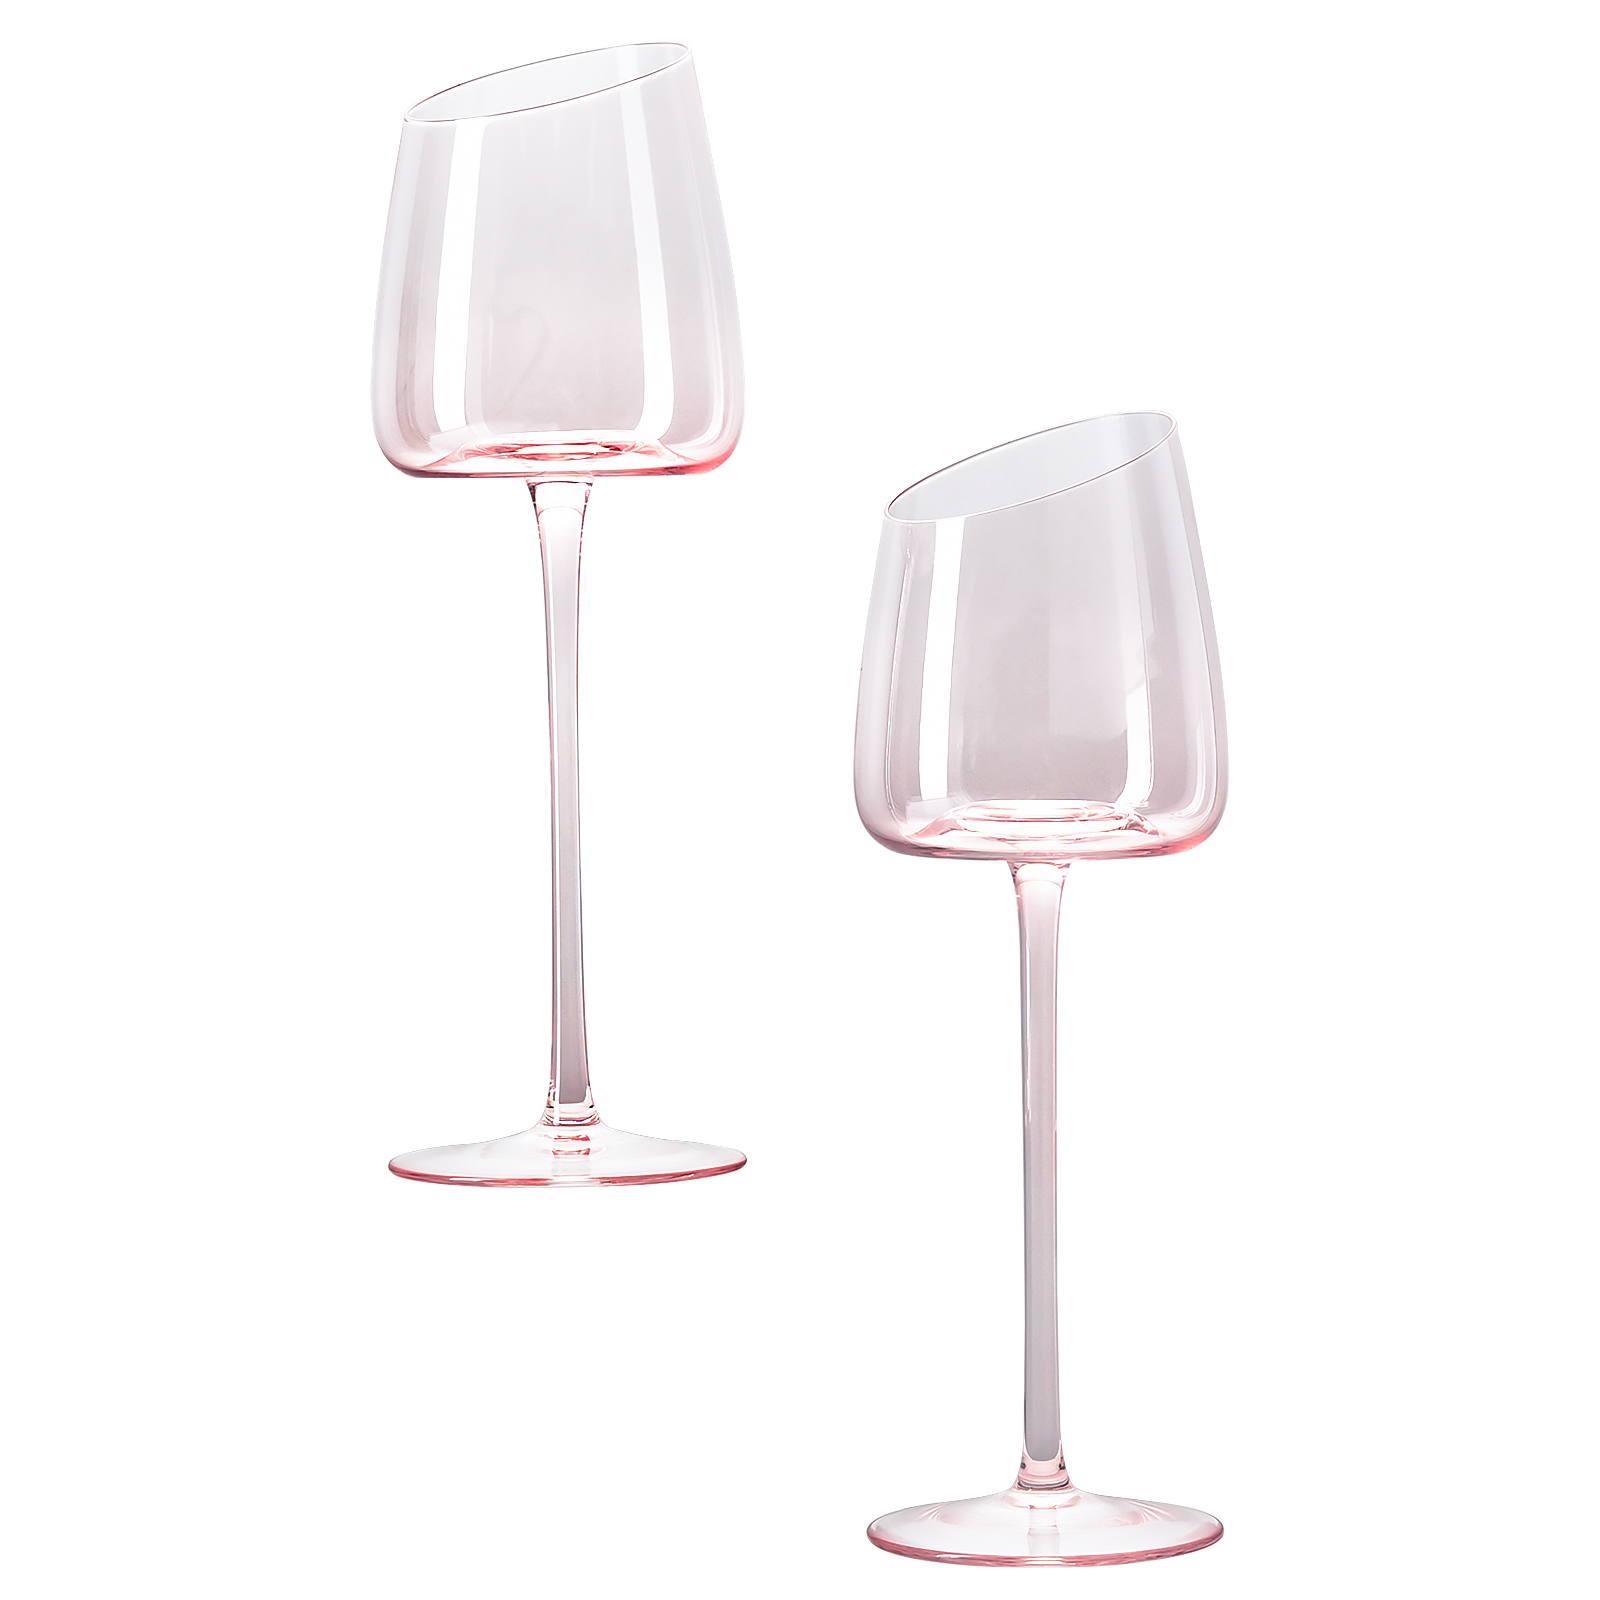 VENTRAY Home 法式粉水晶勃艮第红酒杯无铅高级水晶香槟杯长柄斜口红酒杯,2 只装,礼盒装,红酒杯